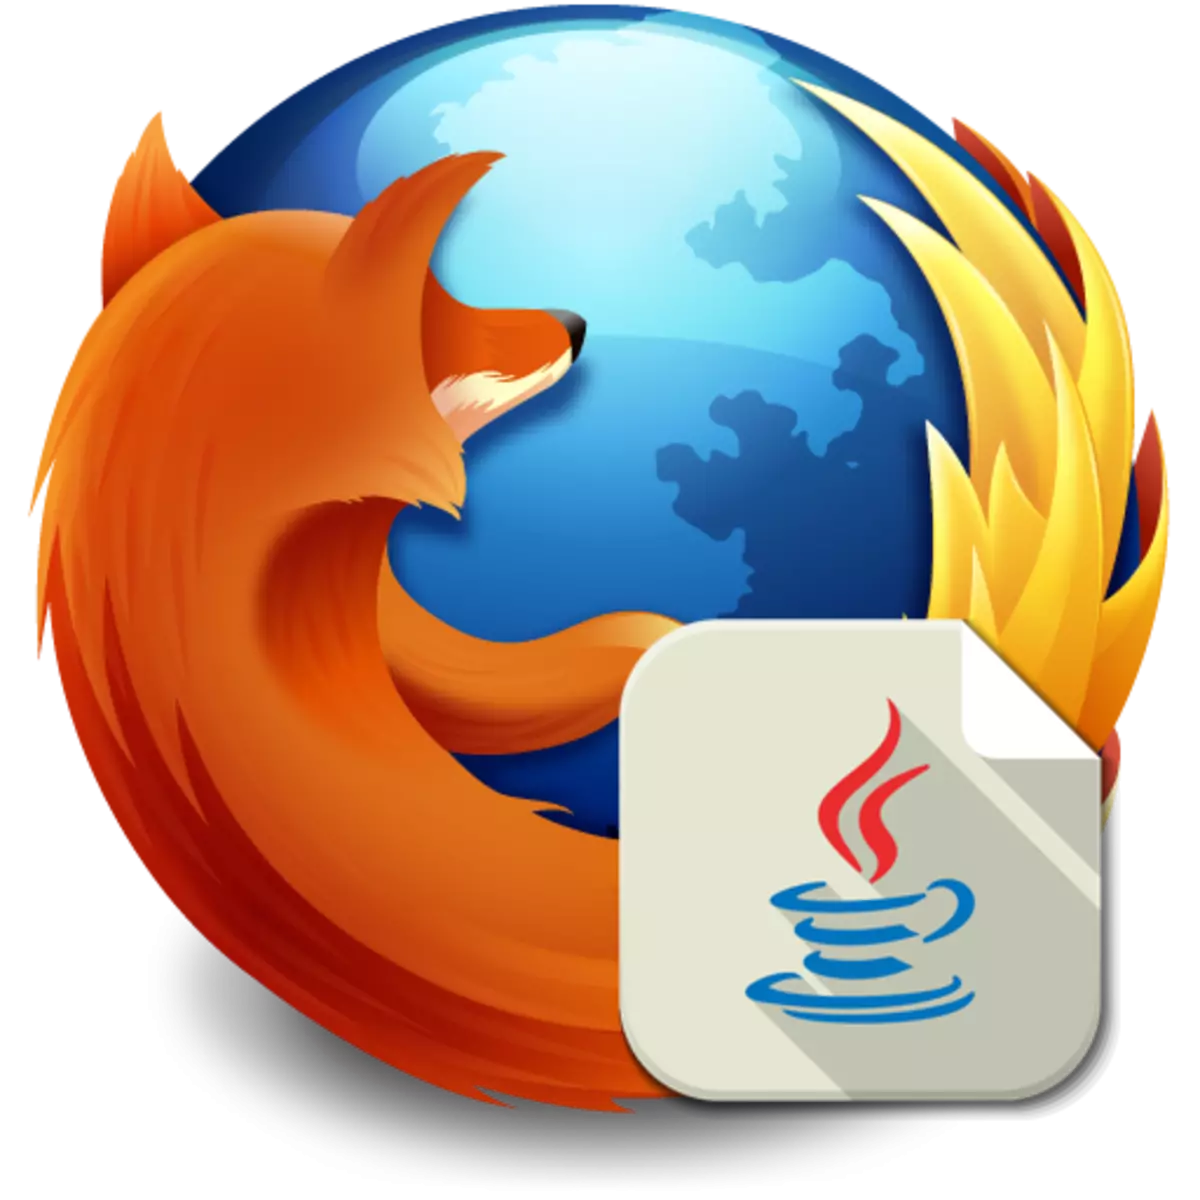 Java tidak berfungsi di Mozilla Firefox